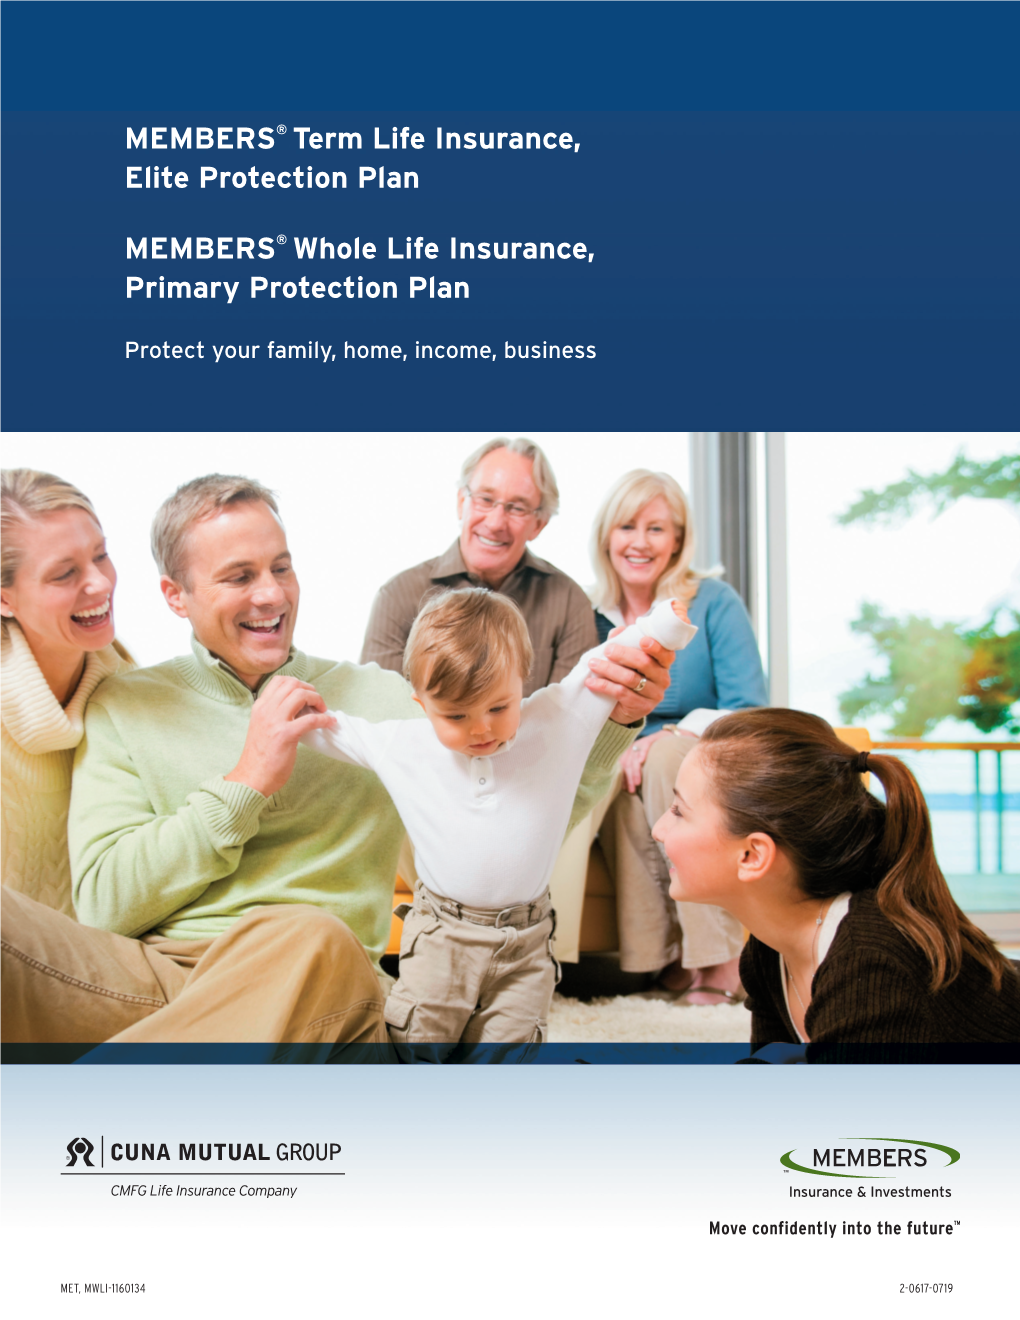 MEMBERS® Term Life Insurance, Elite Protection Plan